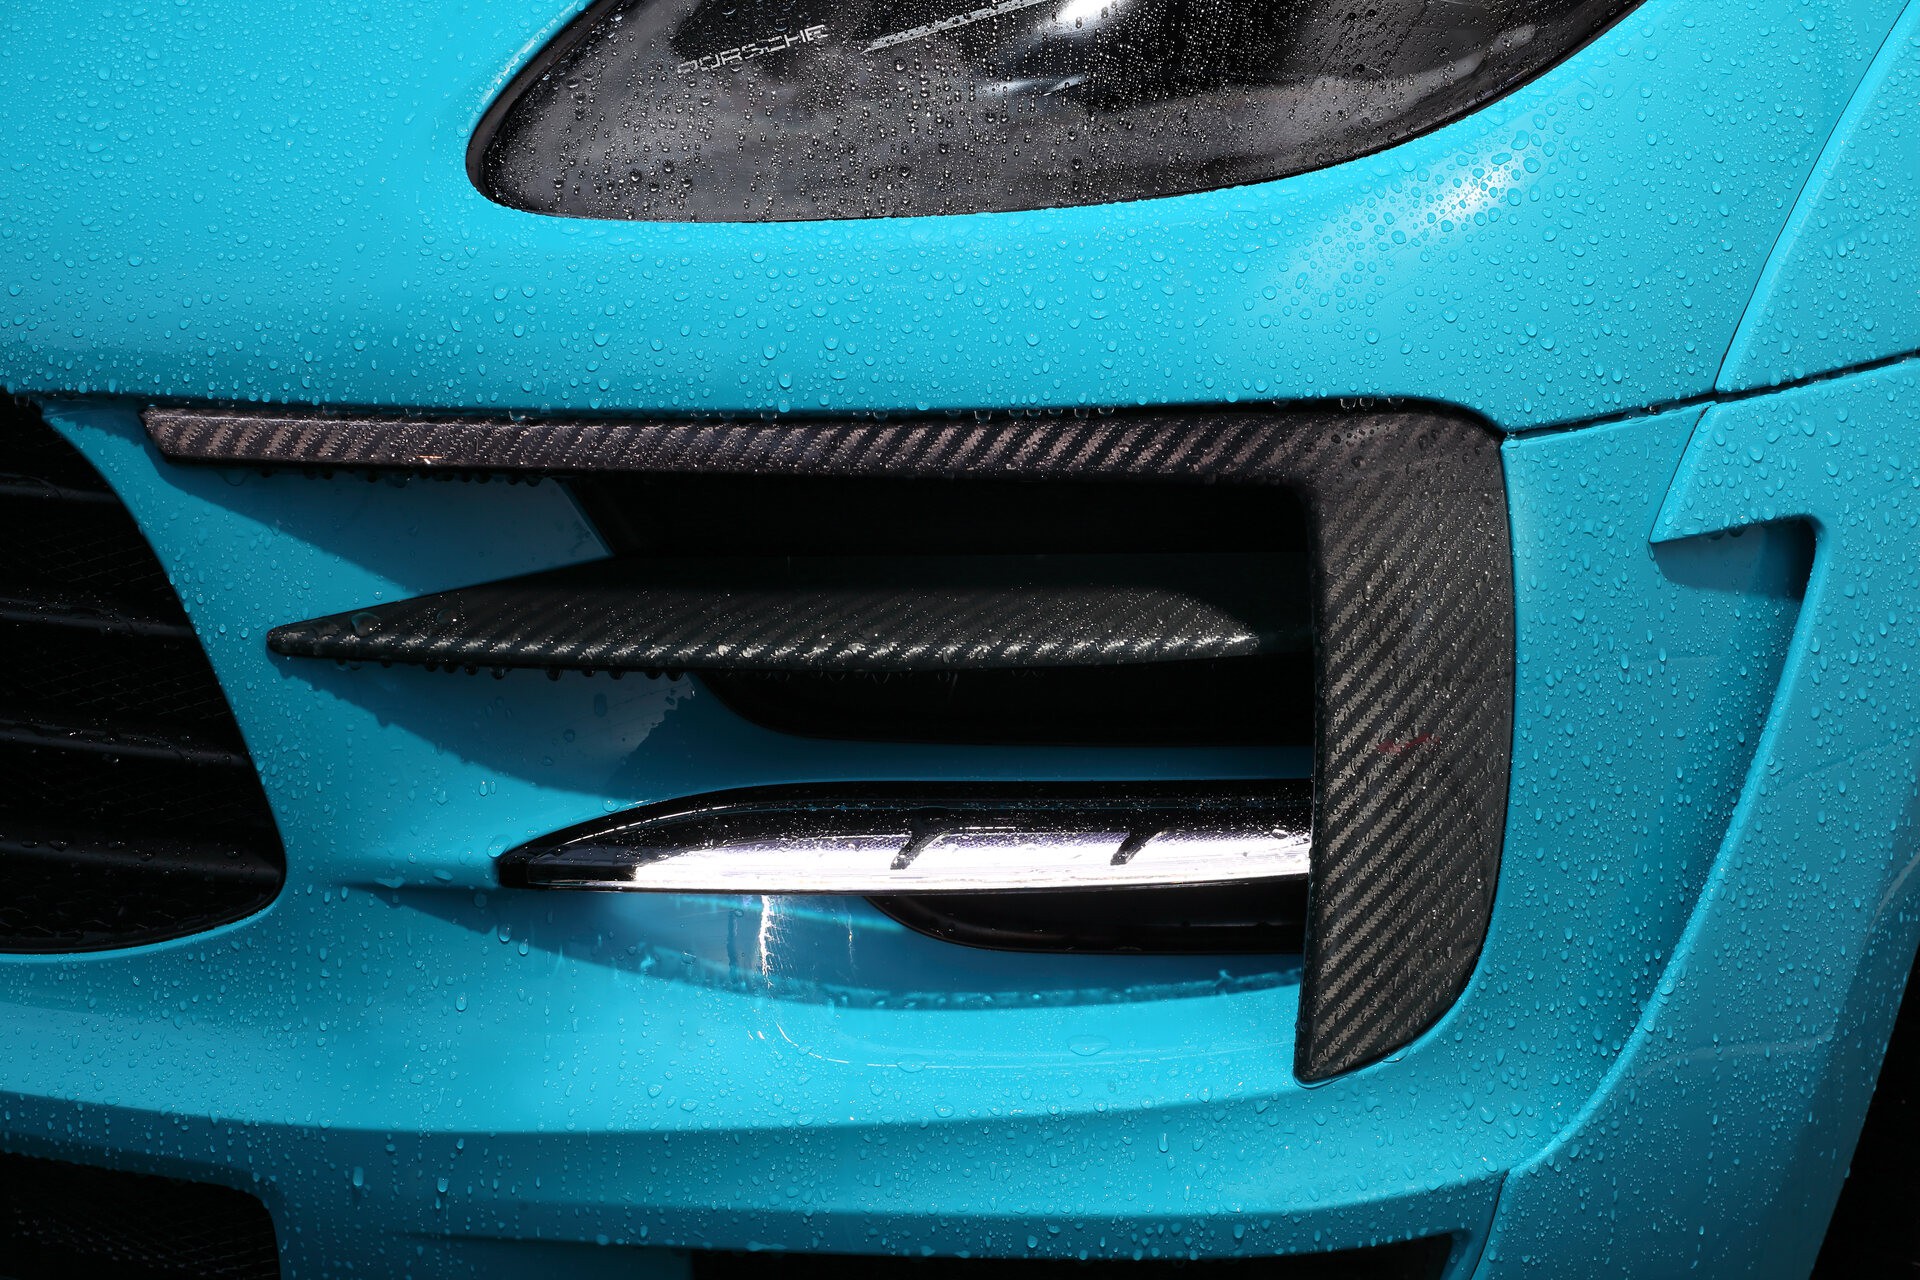 Check our price and buy Topcar Design body kit for Porsche Macan Ursa 2020